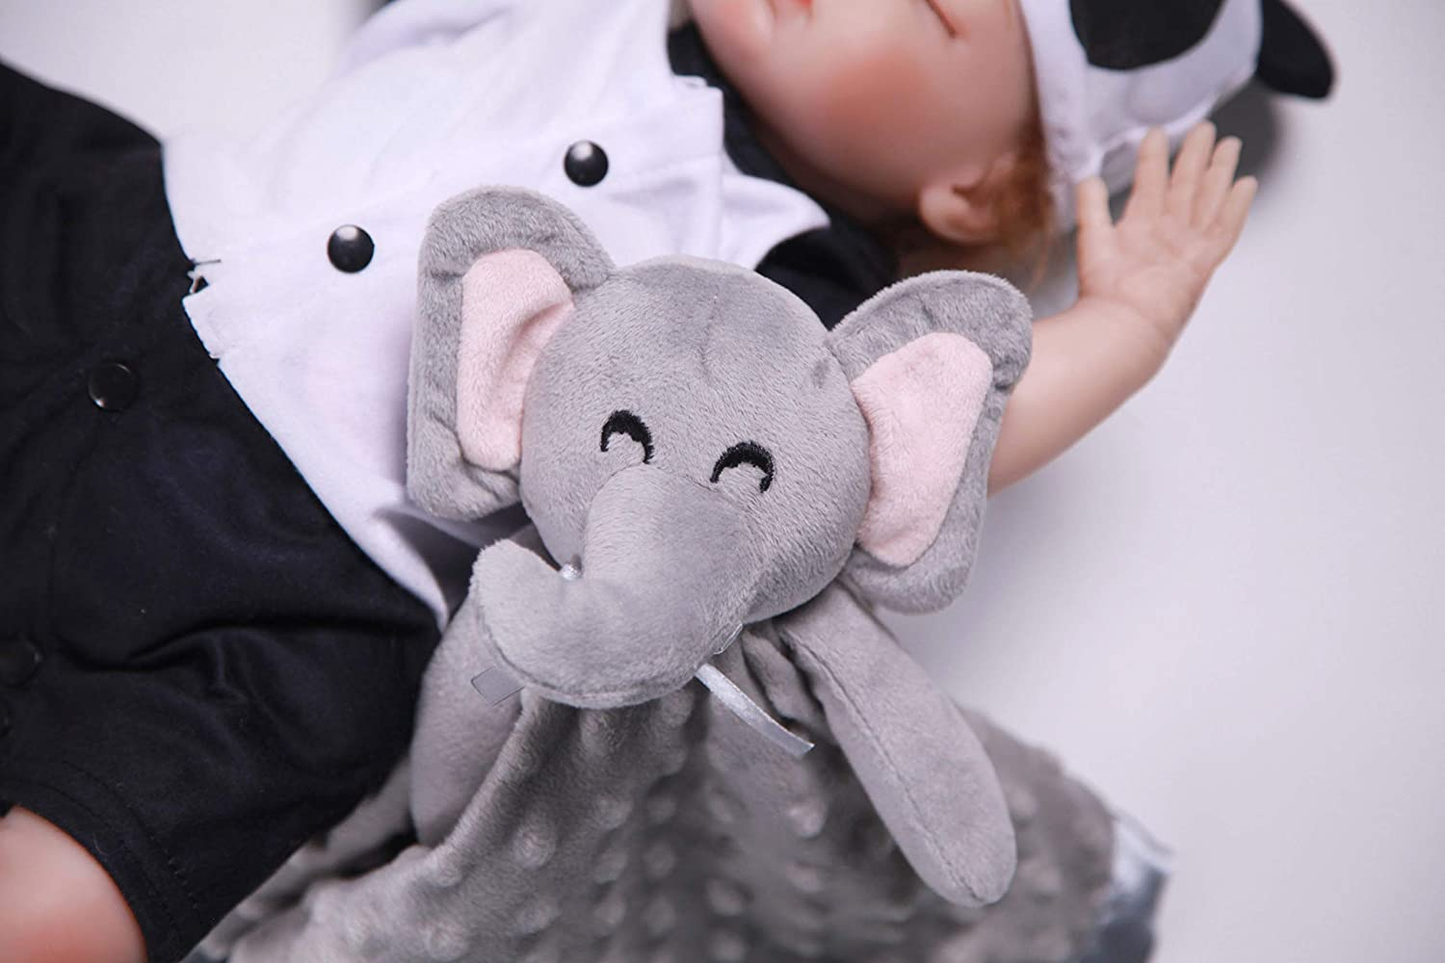  Elephant Security Blanket Soft Baby Lovey Unisex Lovie Baby Gifts for Newborn Boys and Girls Baby Snuggle Toy Baby Elephant Stuffed Animal Grey 16 Inch